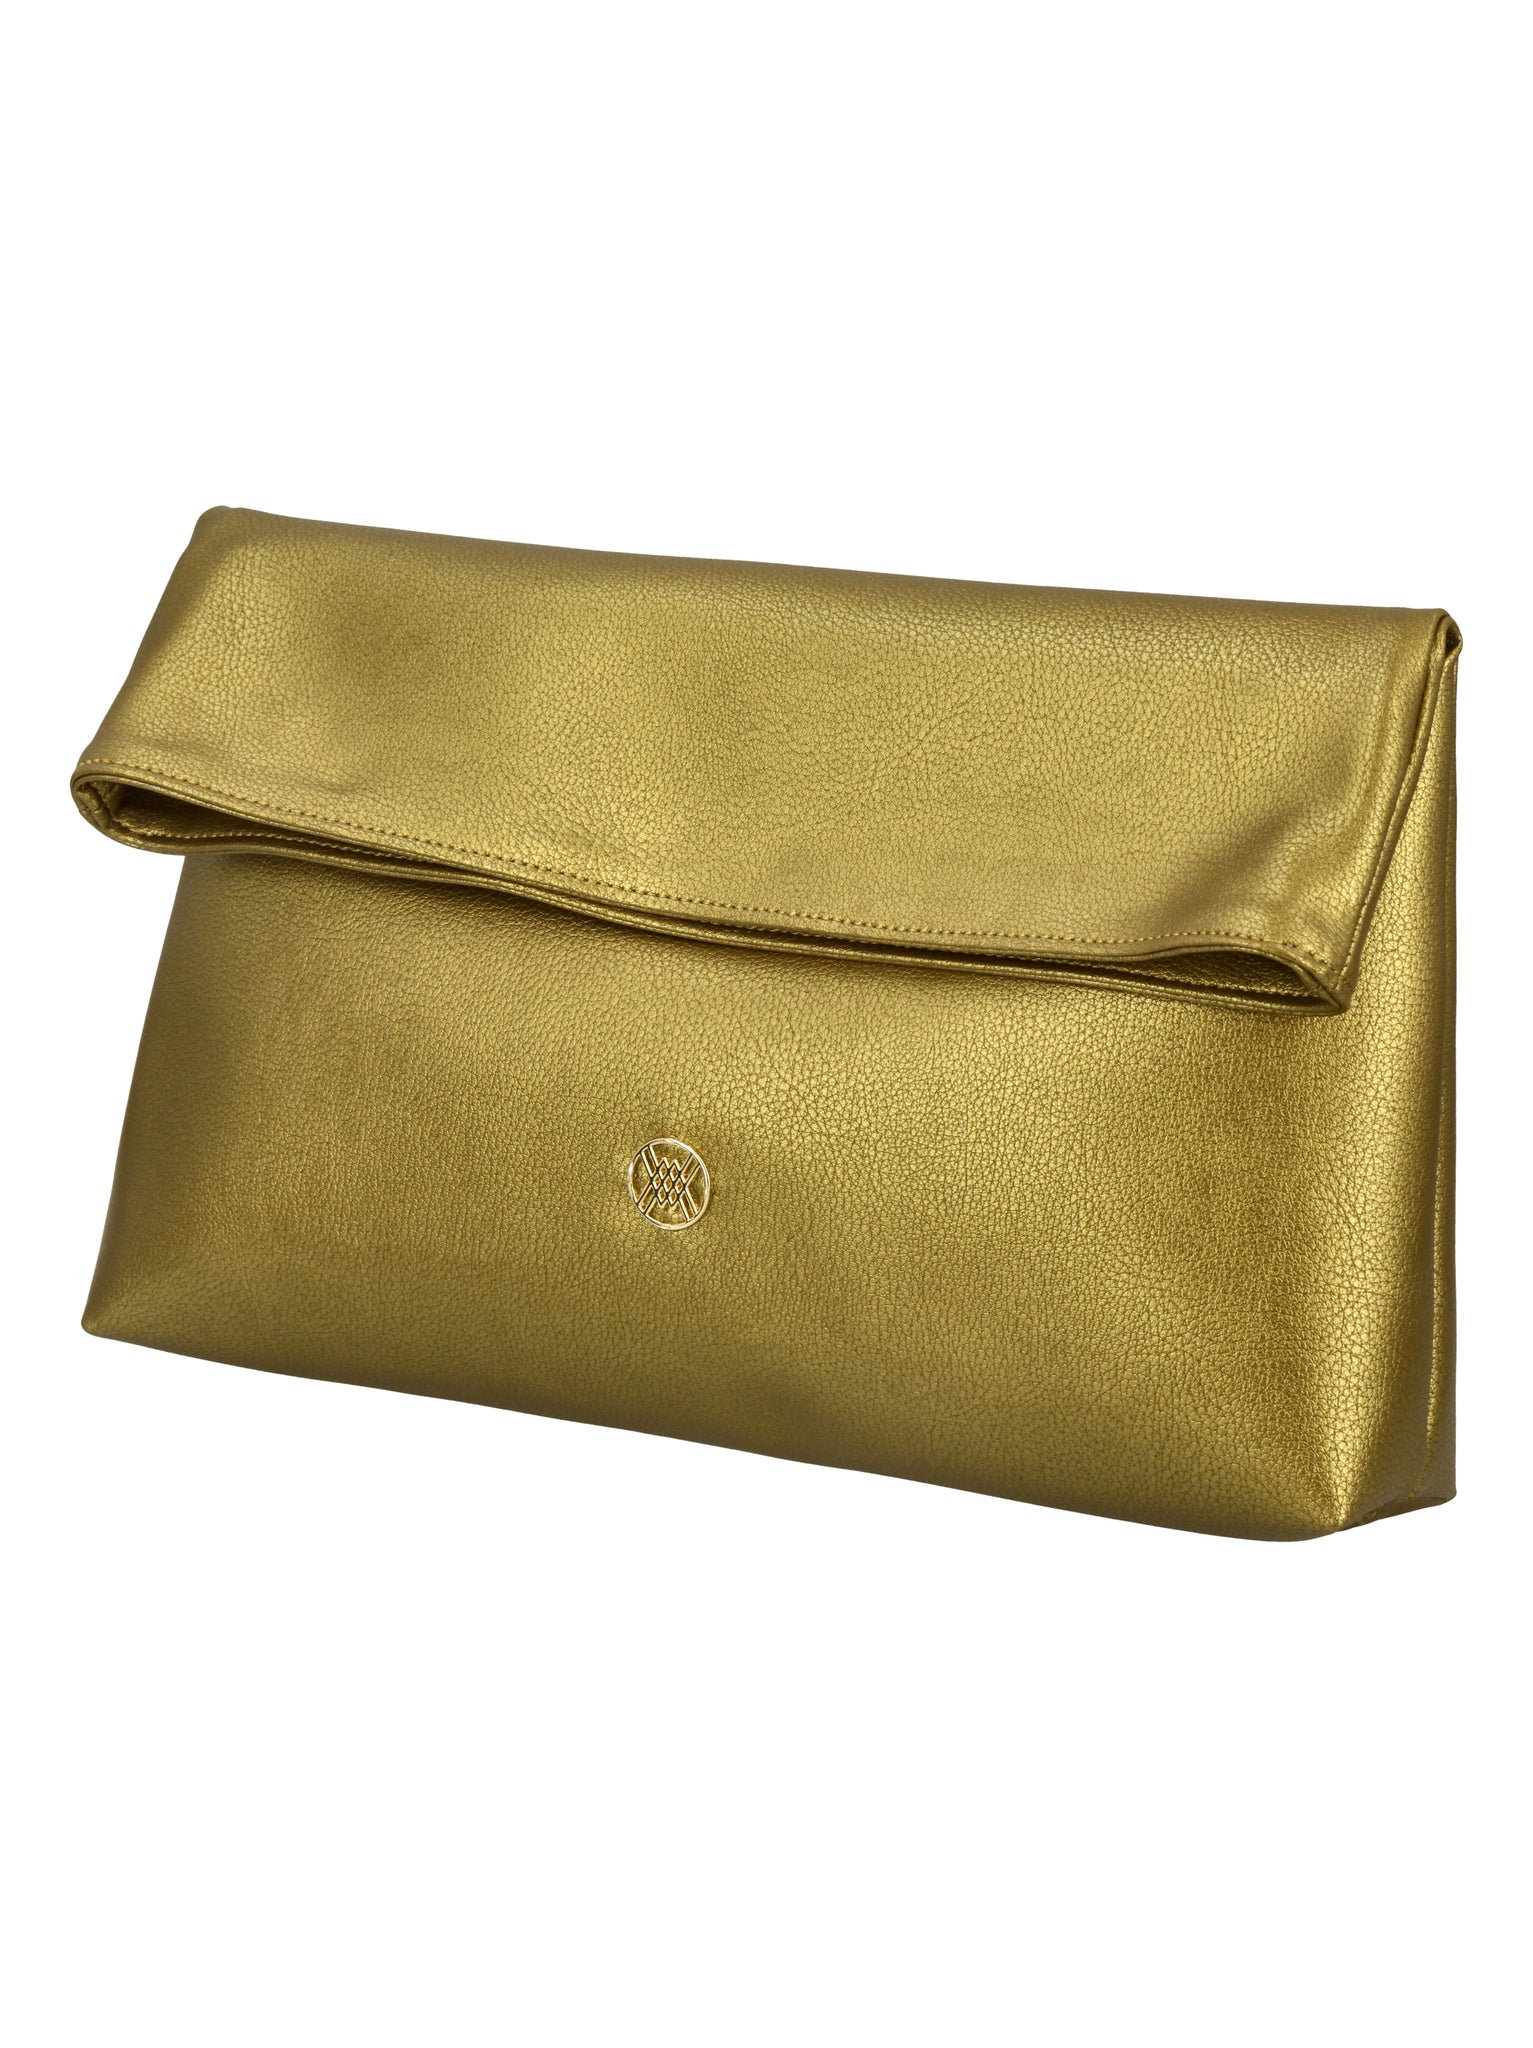 DARIO vegan leather clutch bag - Metallic gold